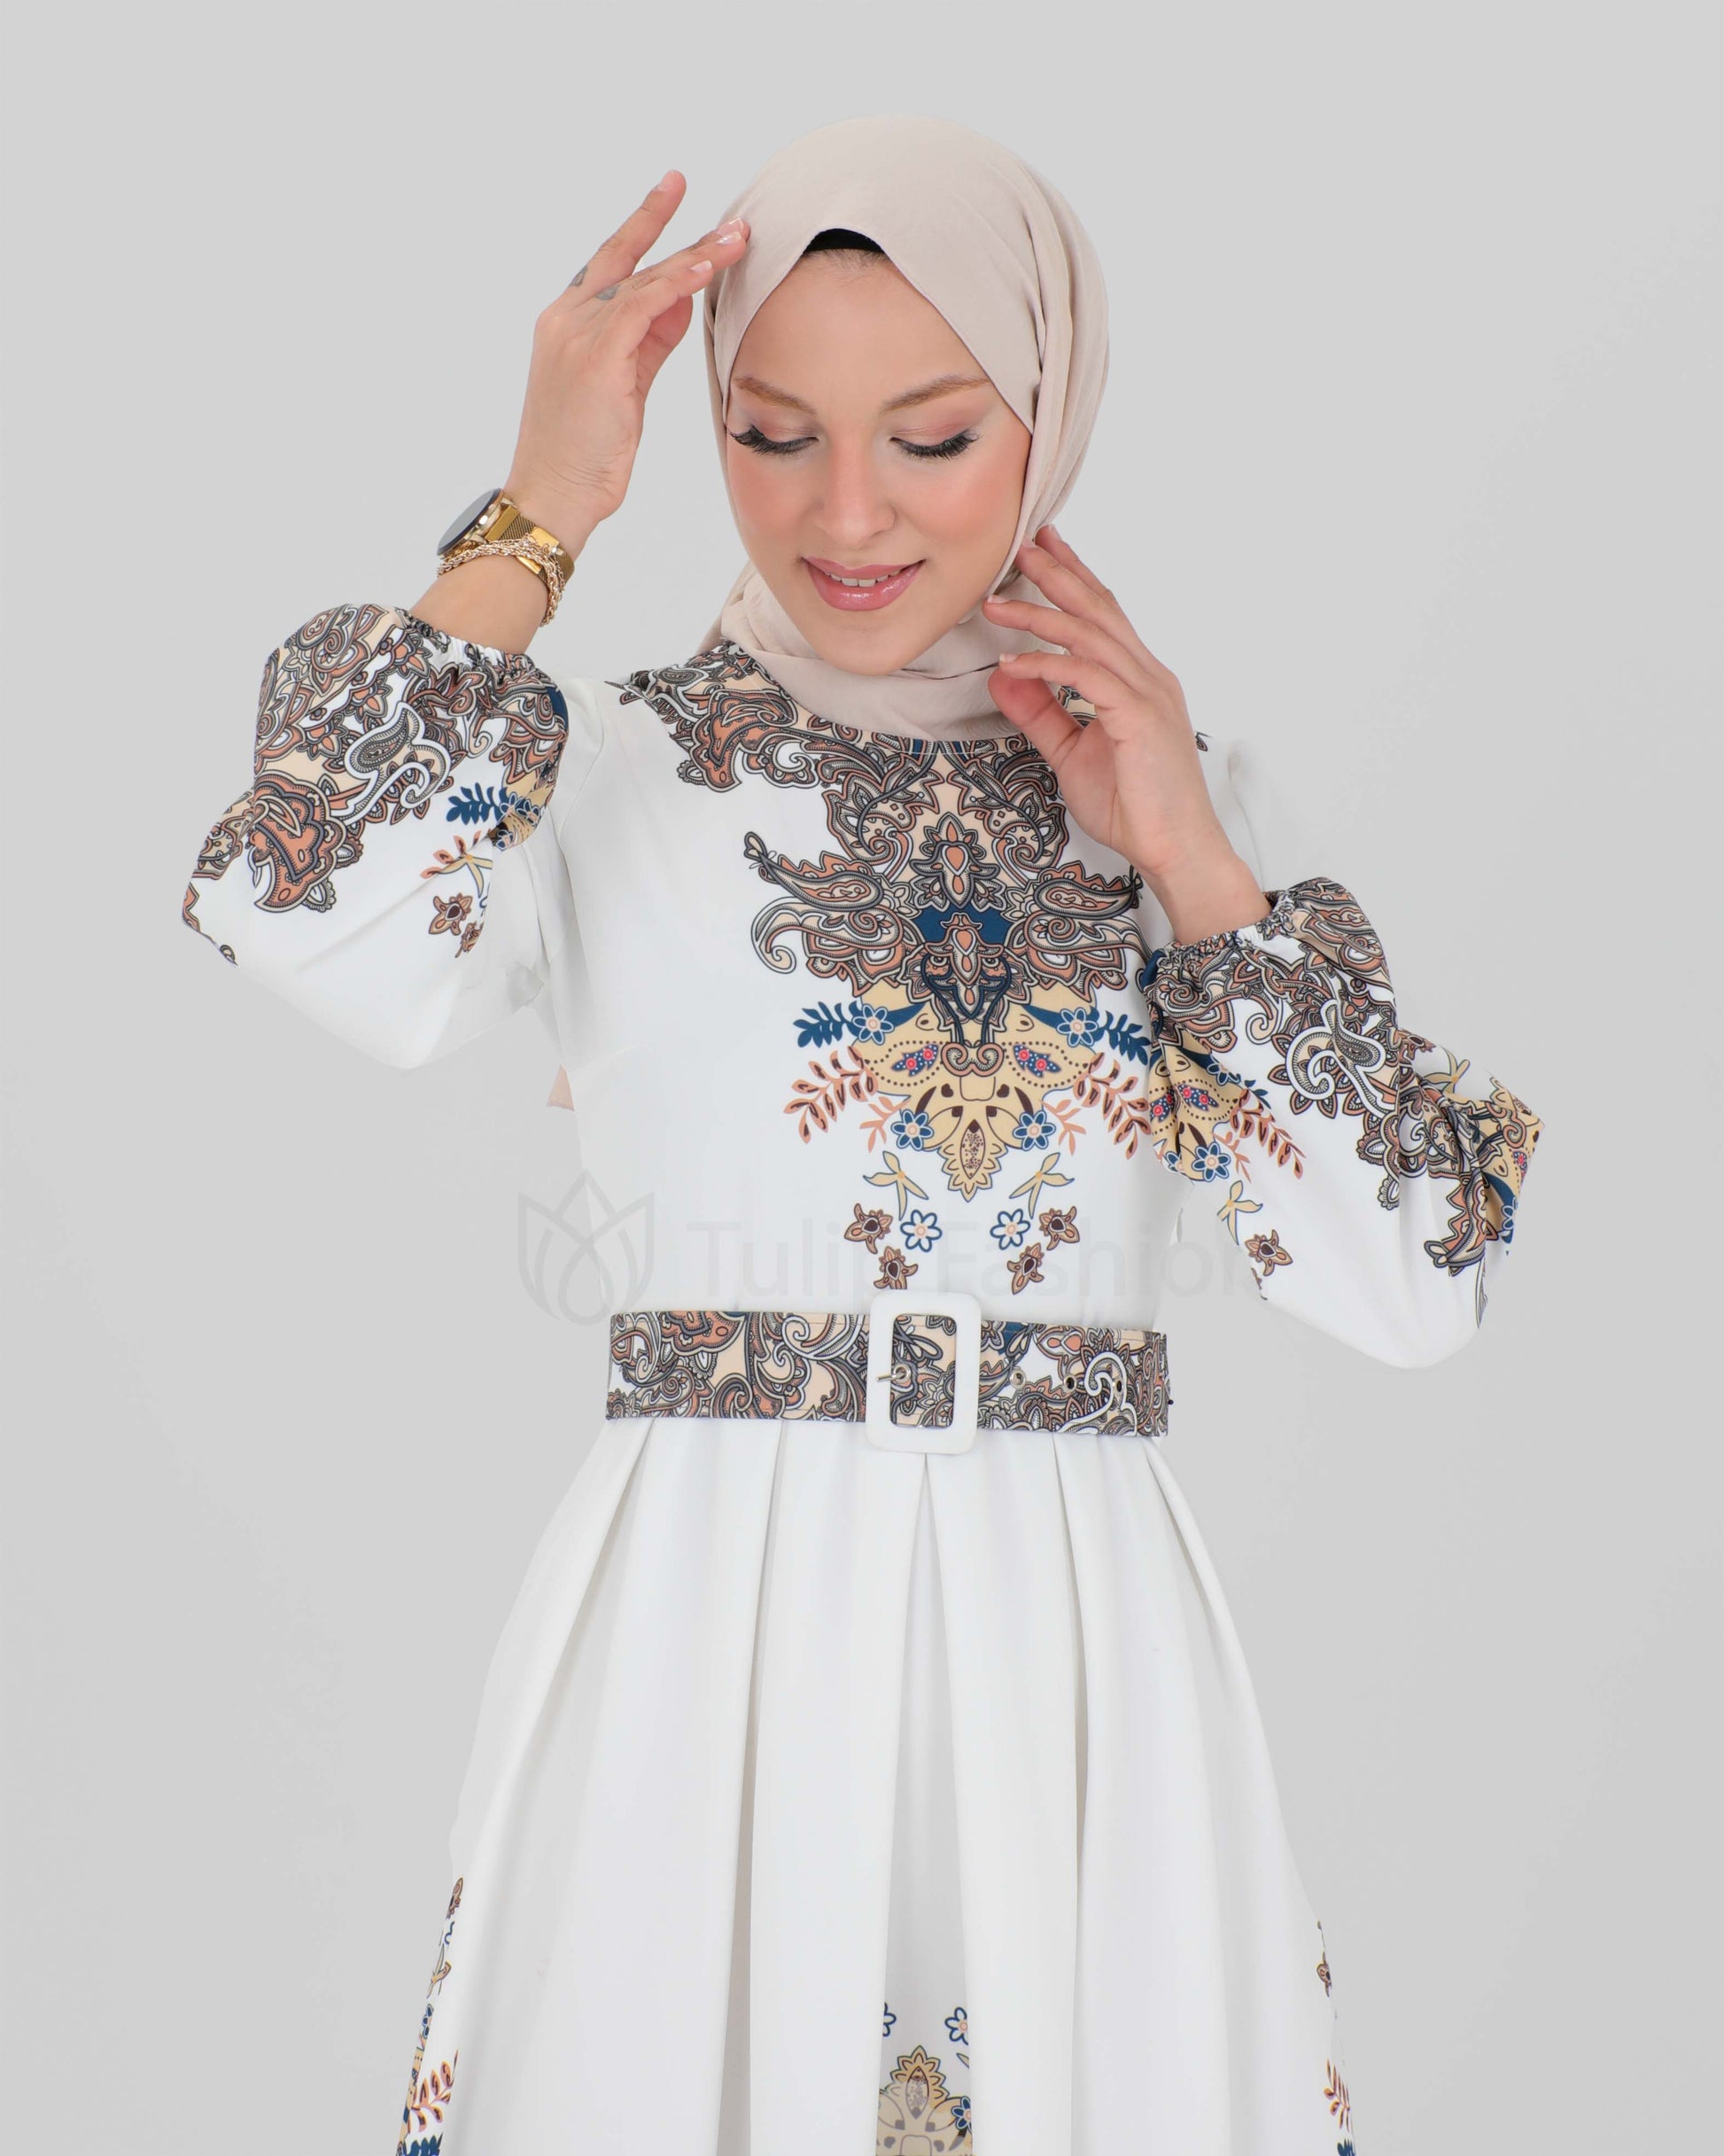 Maxi Dress - White